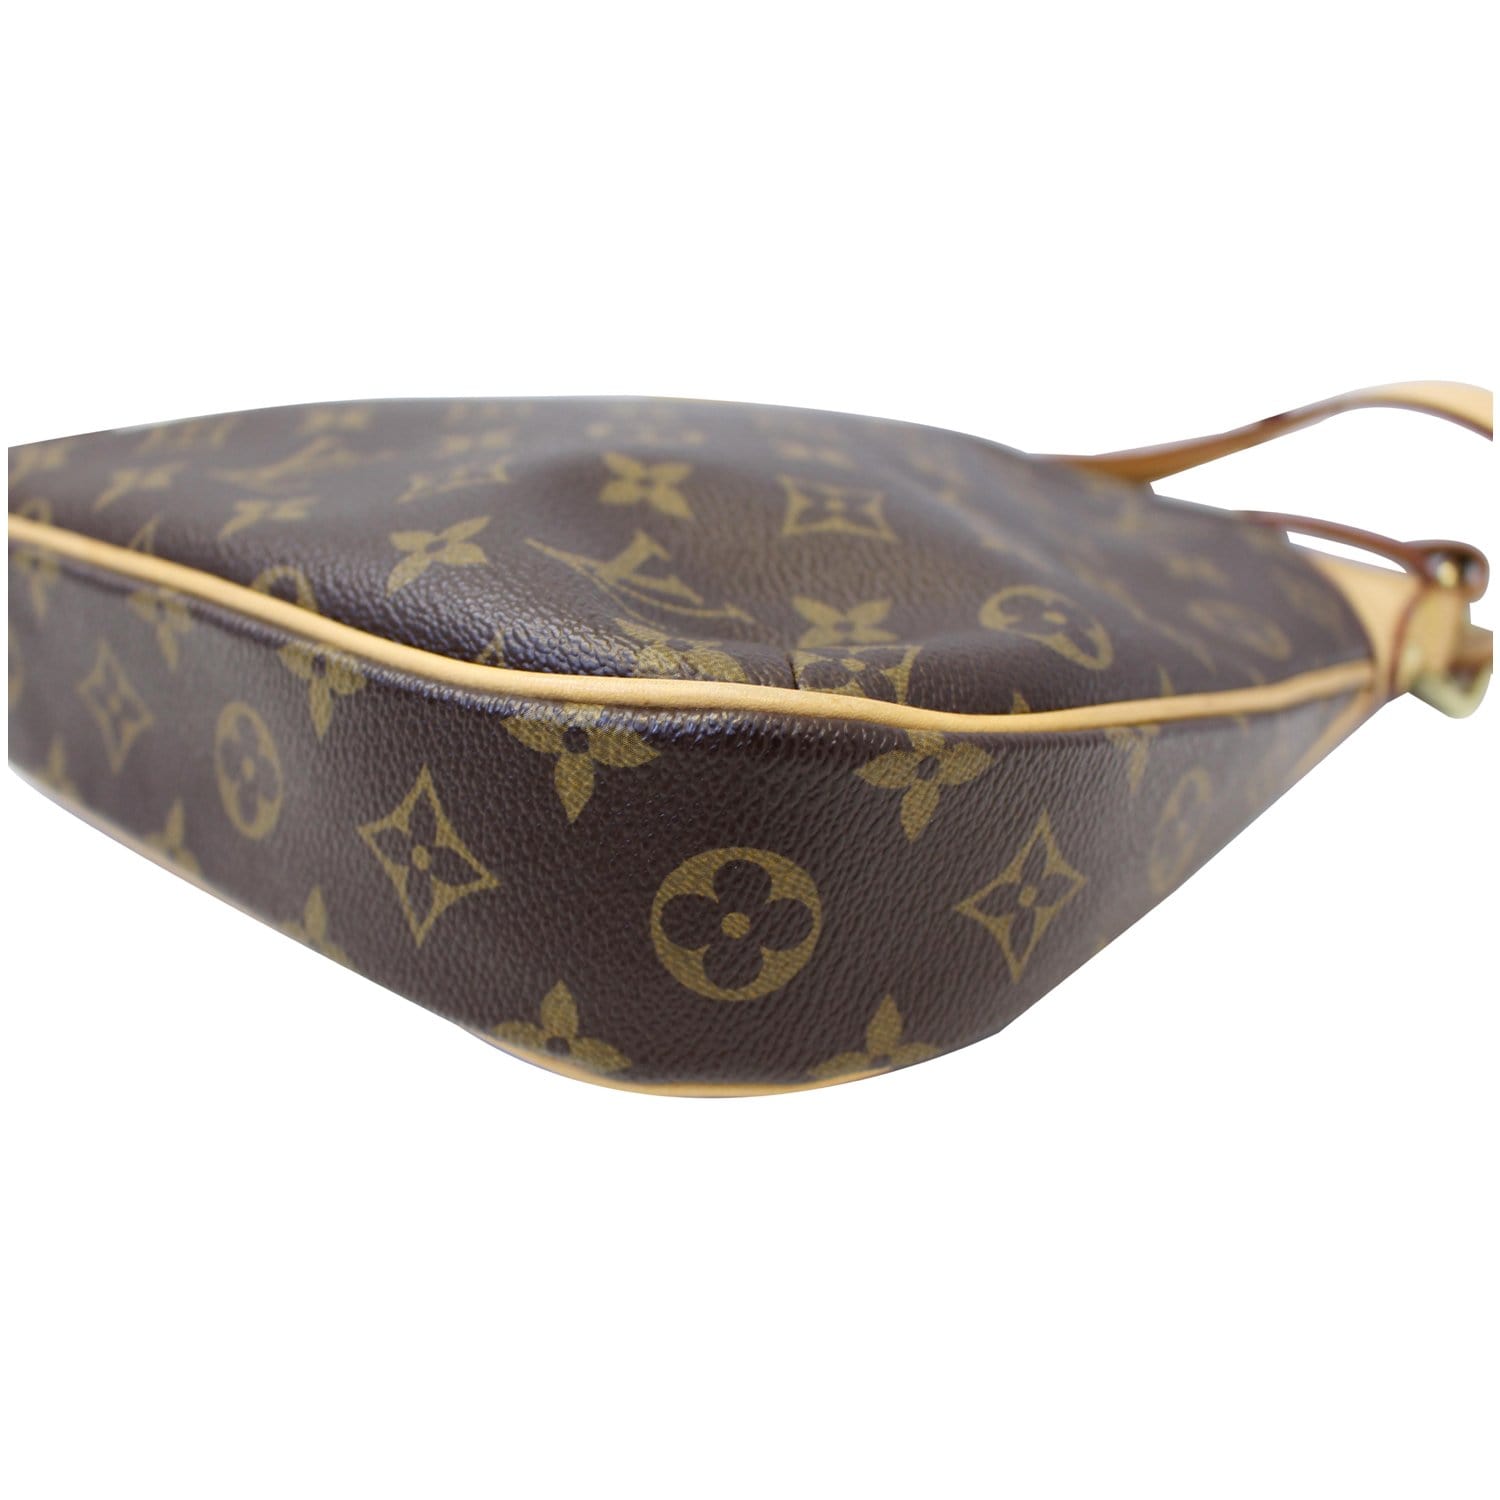 Shoulder Bag TOP. M45355 ODEON MM PM Designer Handbag Hobo Clutch Satchel Tote  Purse Crossbody Cross Body Bag M45352 From Luxurysneakers0923, $254.92